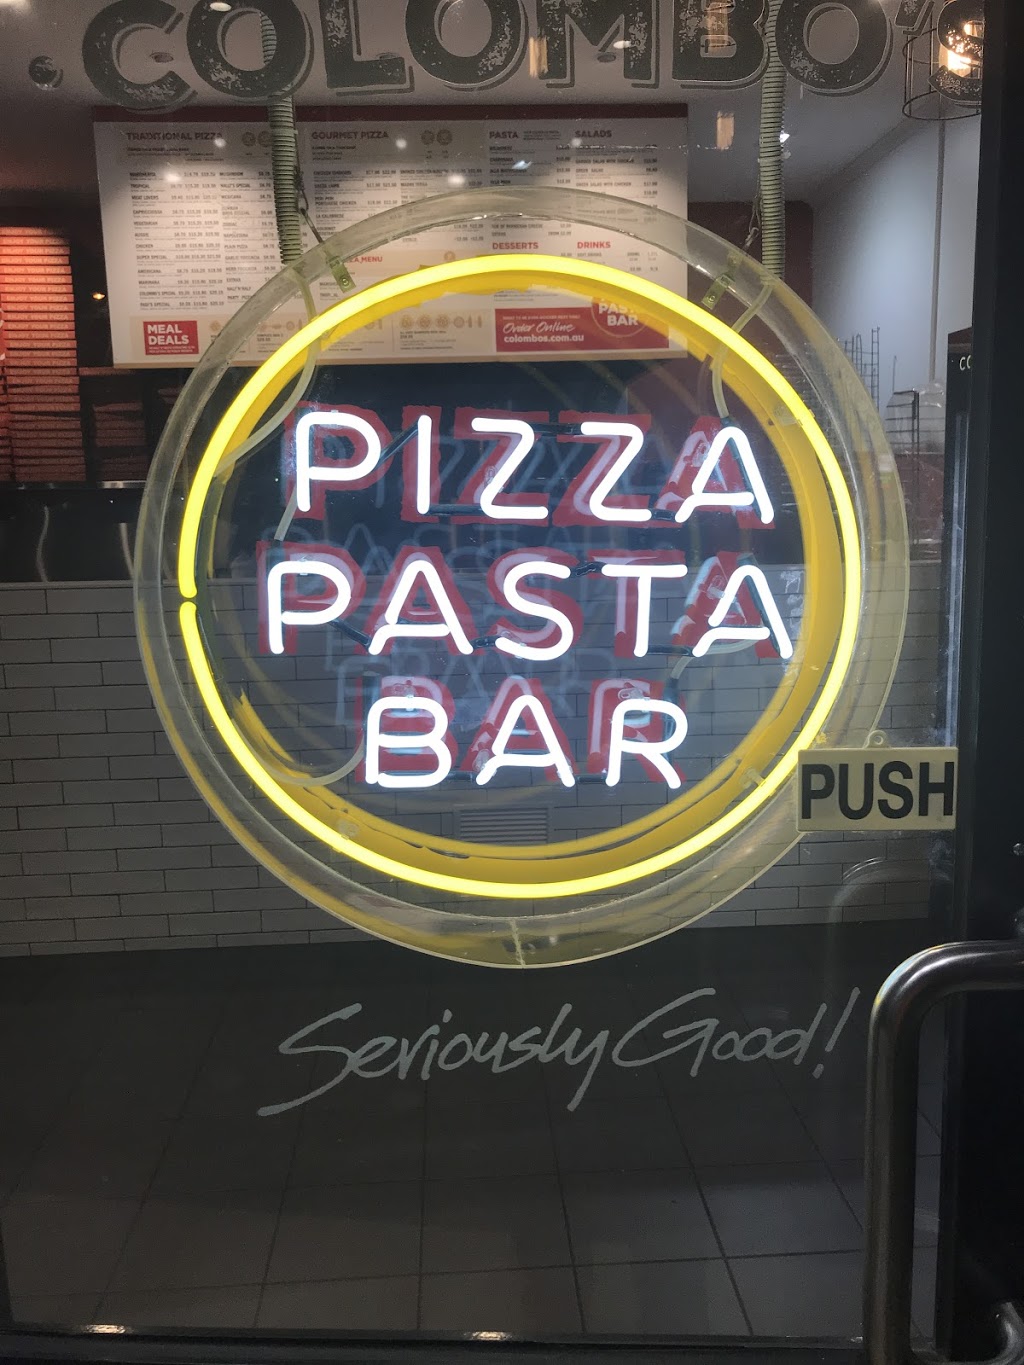 Amalfi Pizza & Pasta | 506 Mountain Hwy, Wantirna VIC 3152, Australia | Phone: (03) 9729 6743